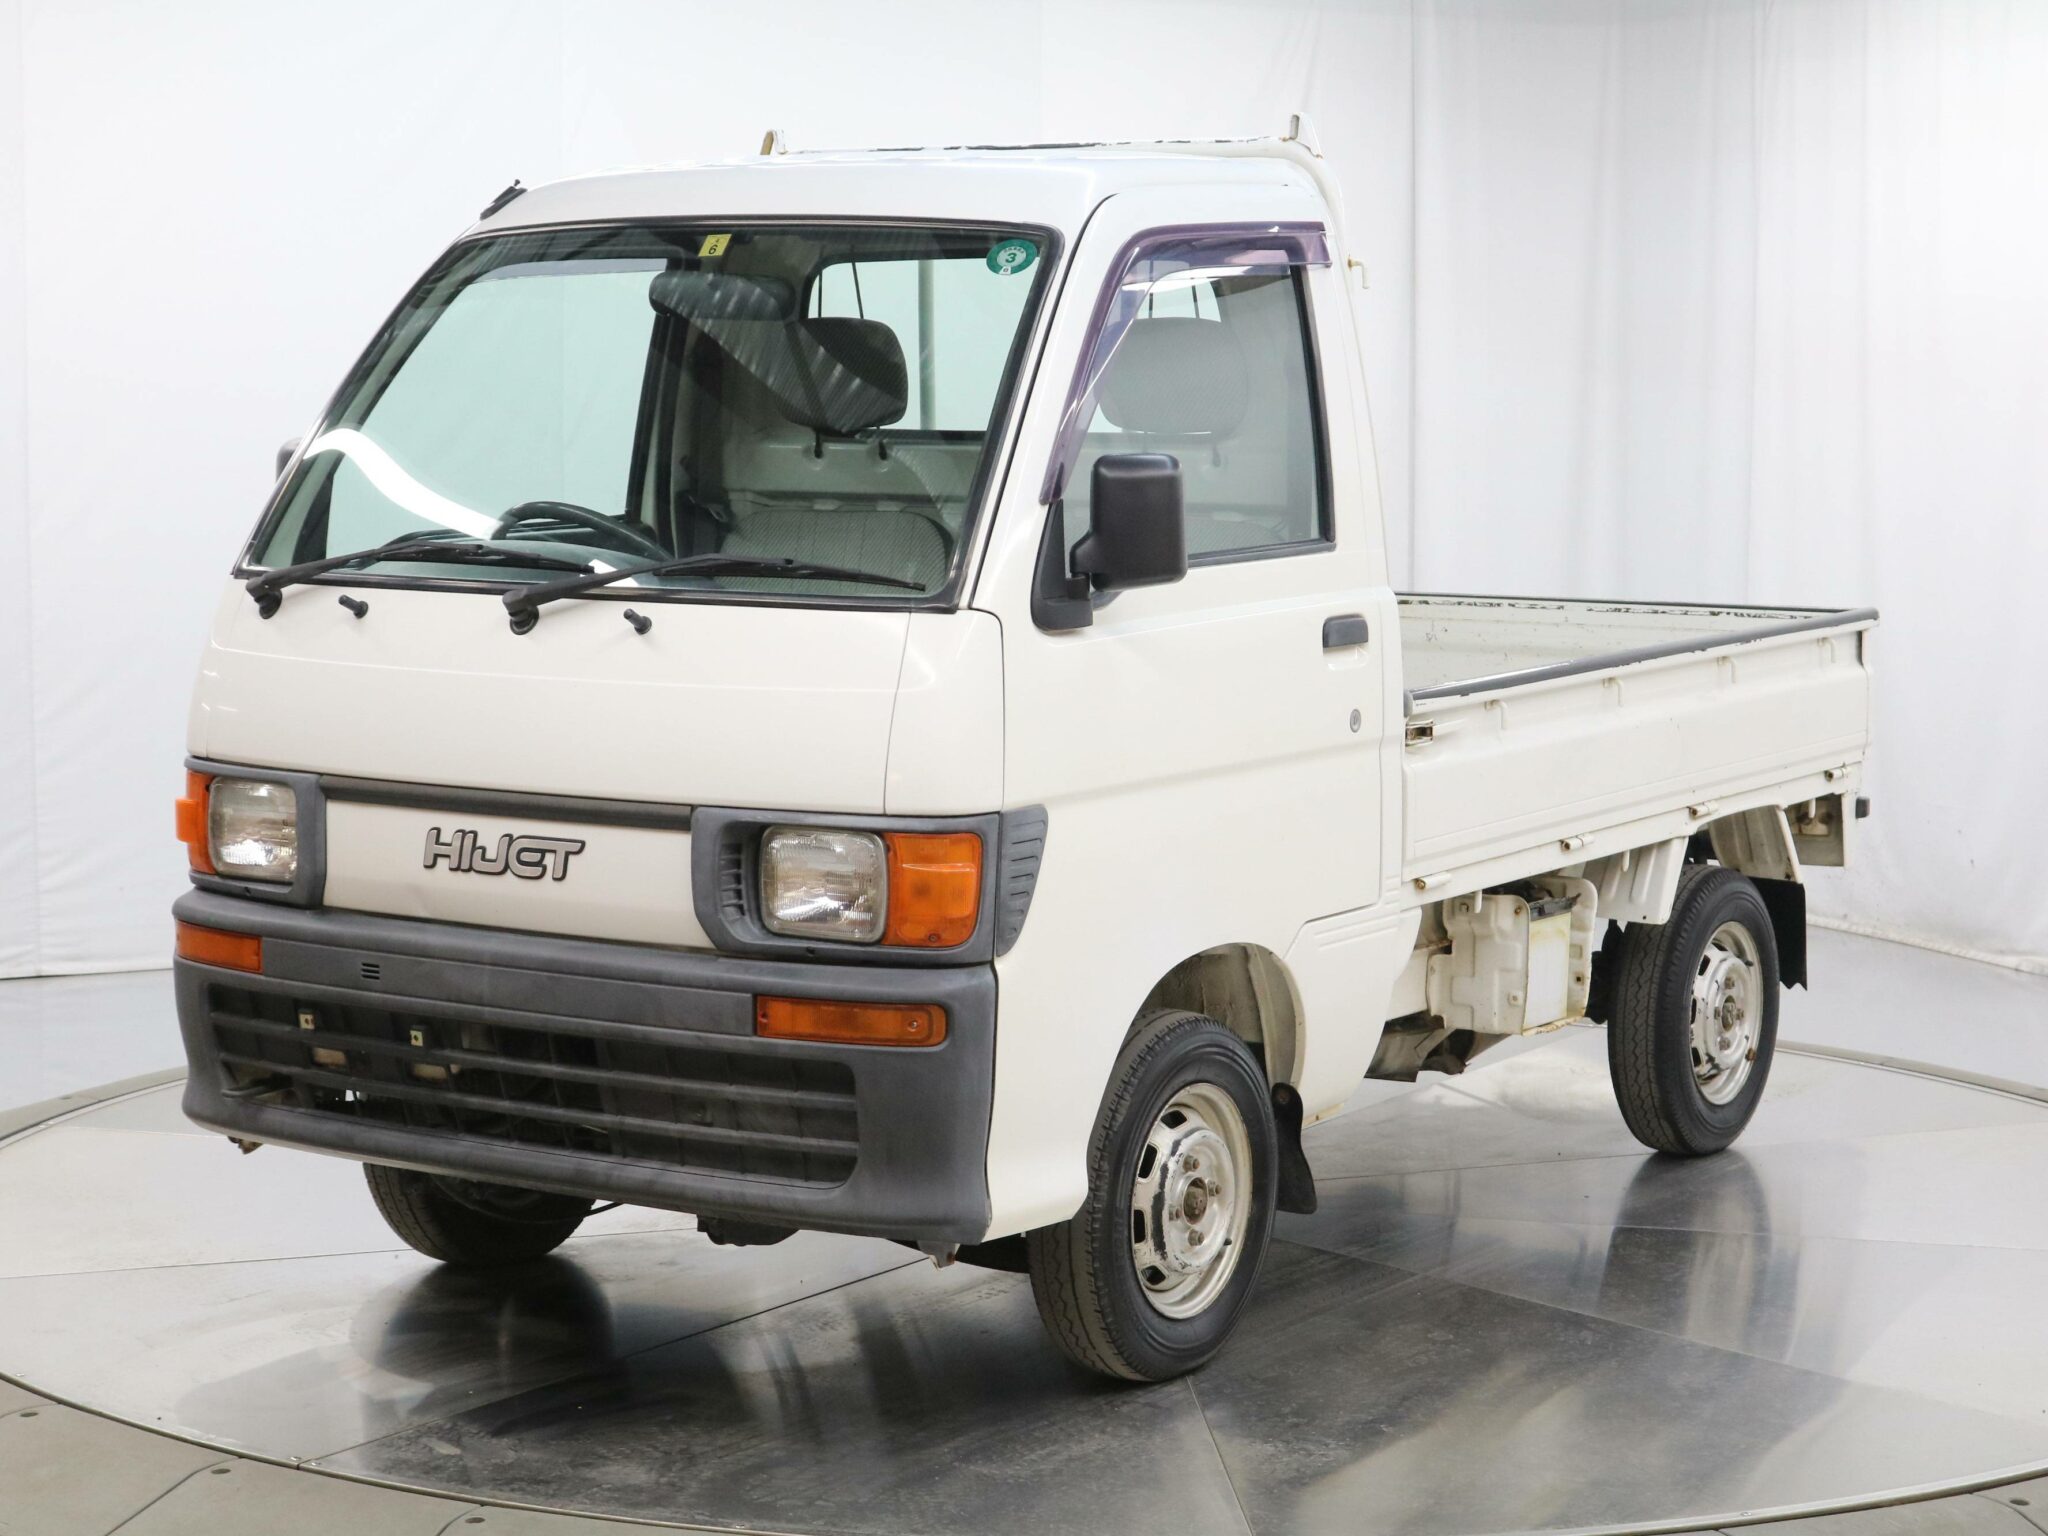 1996 Daihatsu   HiJet Mini-Truck For Sale via duncanimports.com